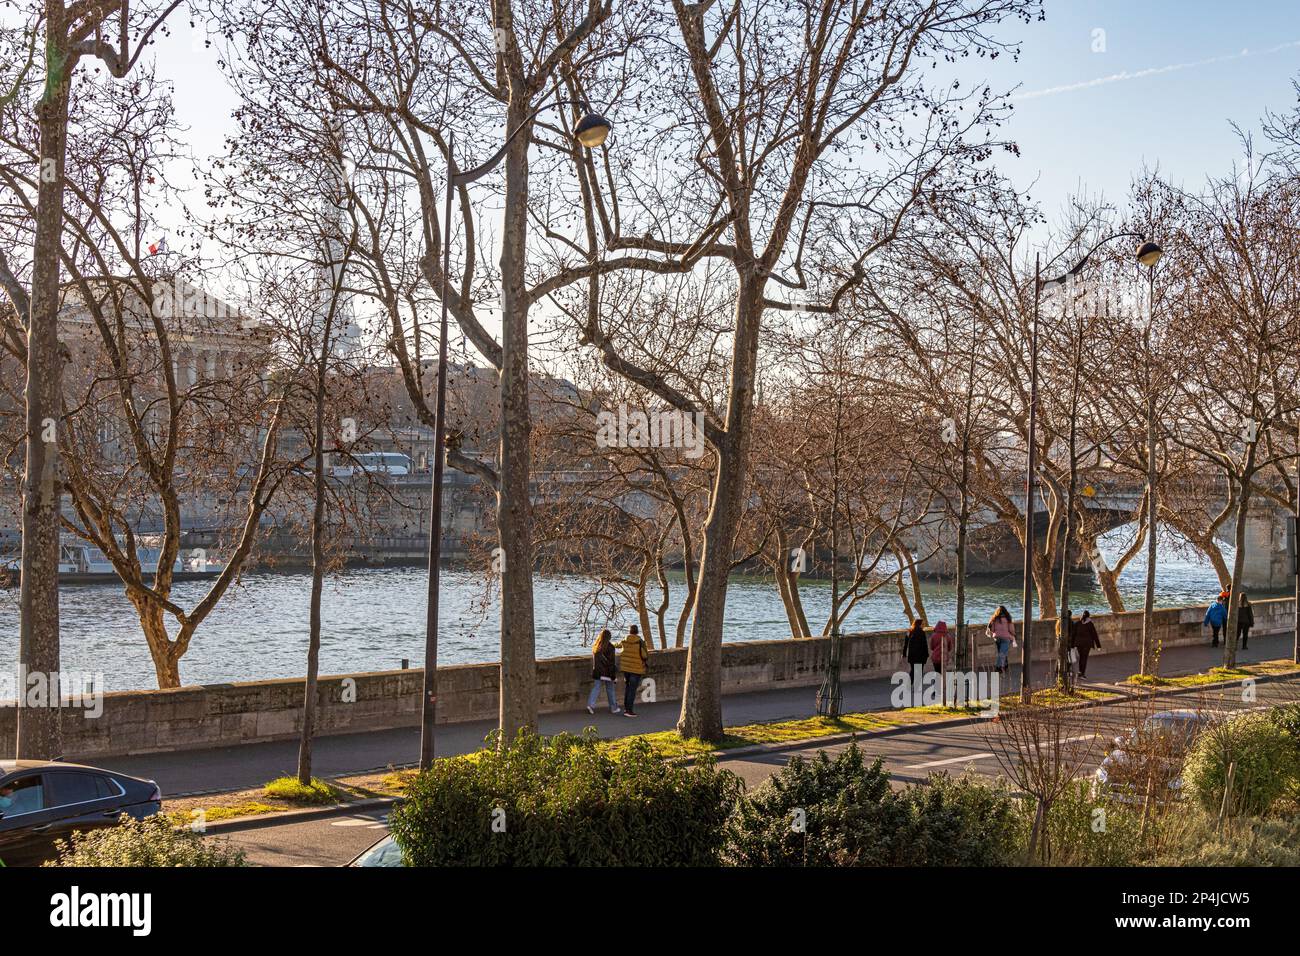 The Quai des Tuileries running alongside the River Seine in Paris, France. Stock Photo